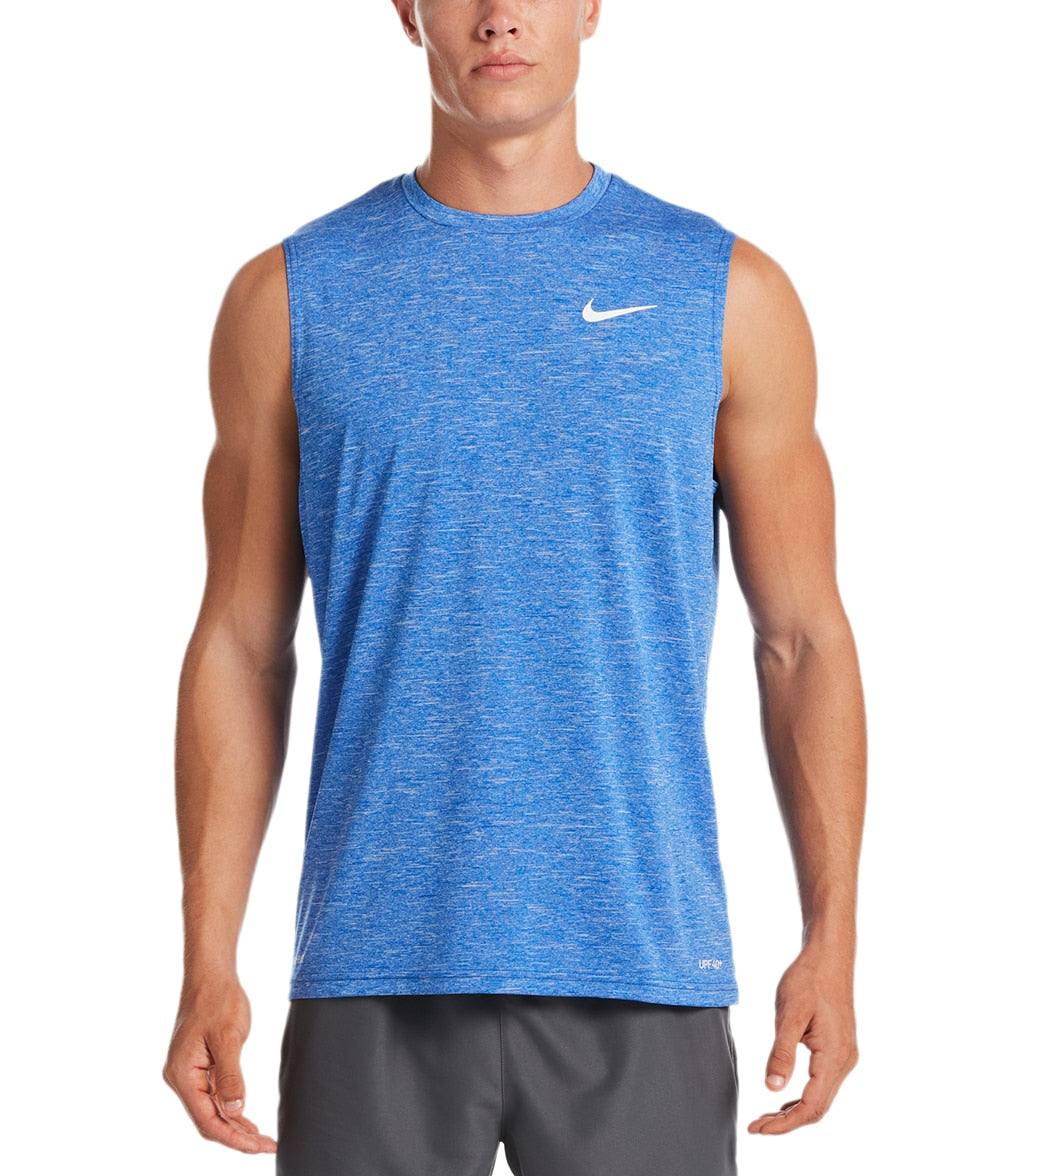 Nike Men's Heather Sleeveless Hydroguard Shirt - Laser Blue Small Polyester - Swimoutlet.com